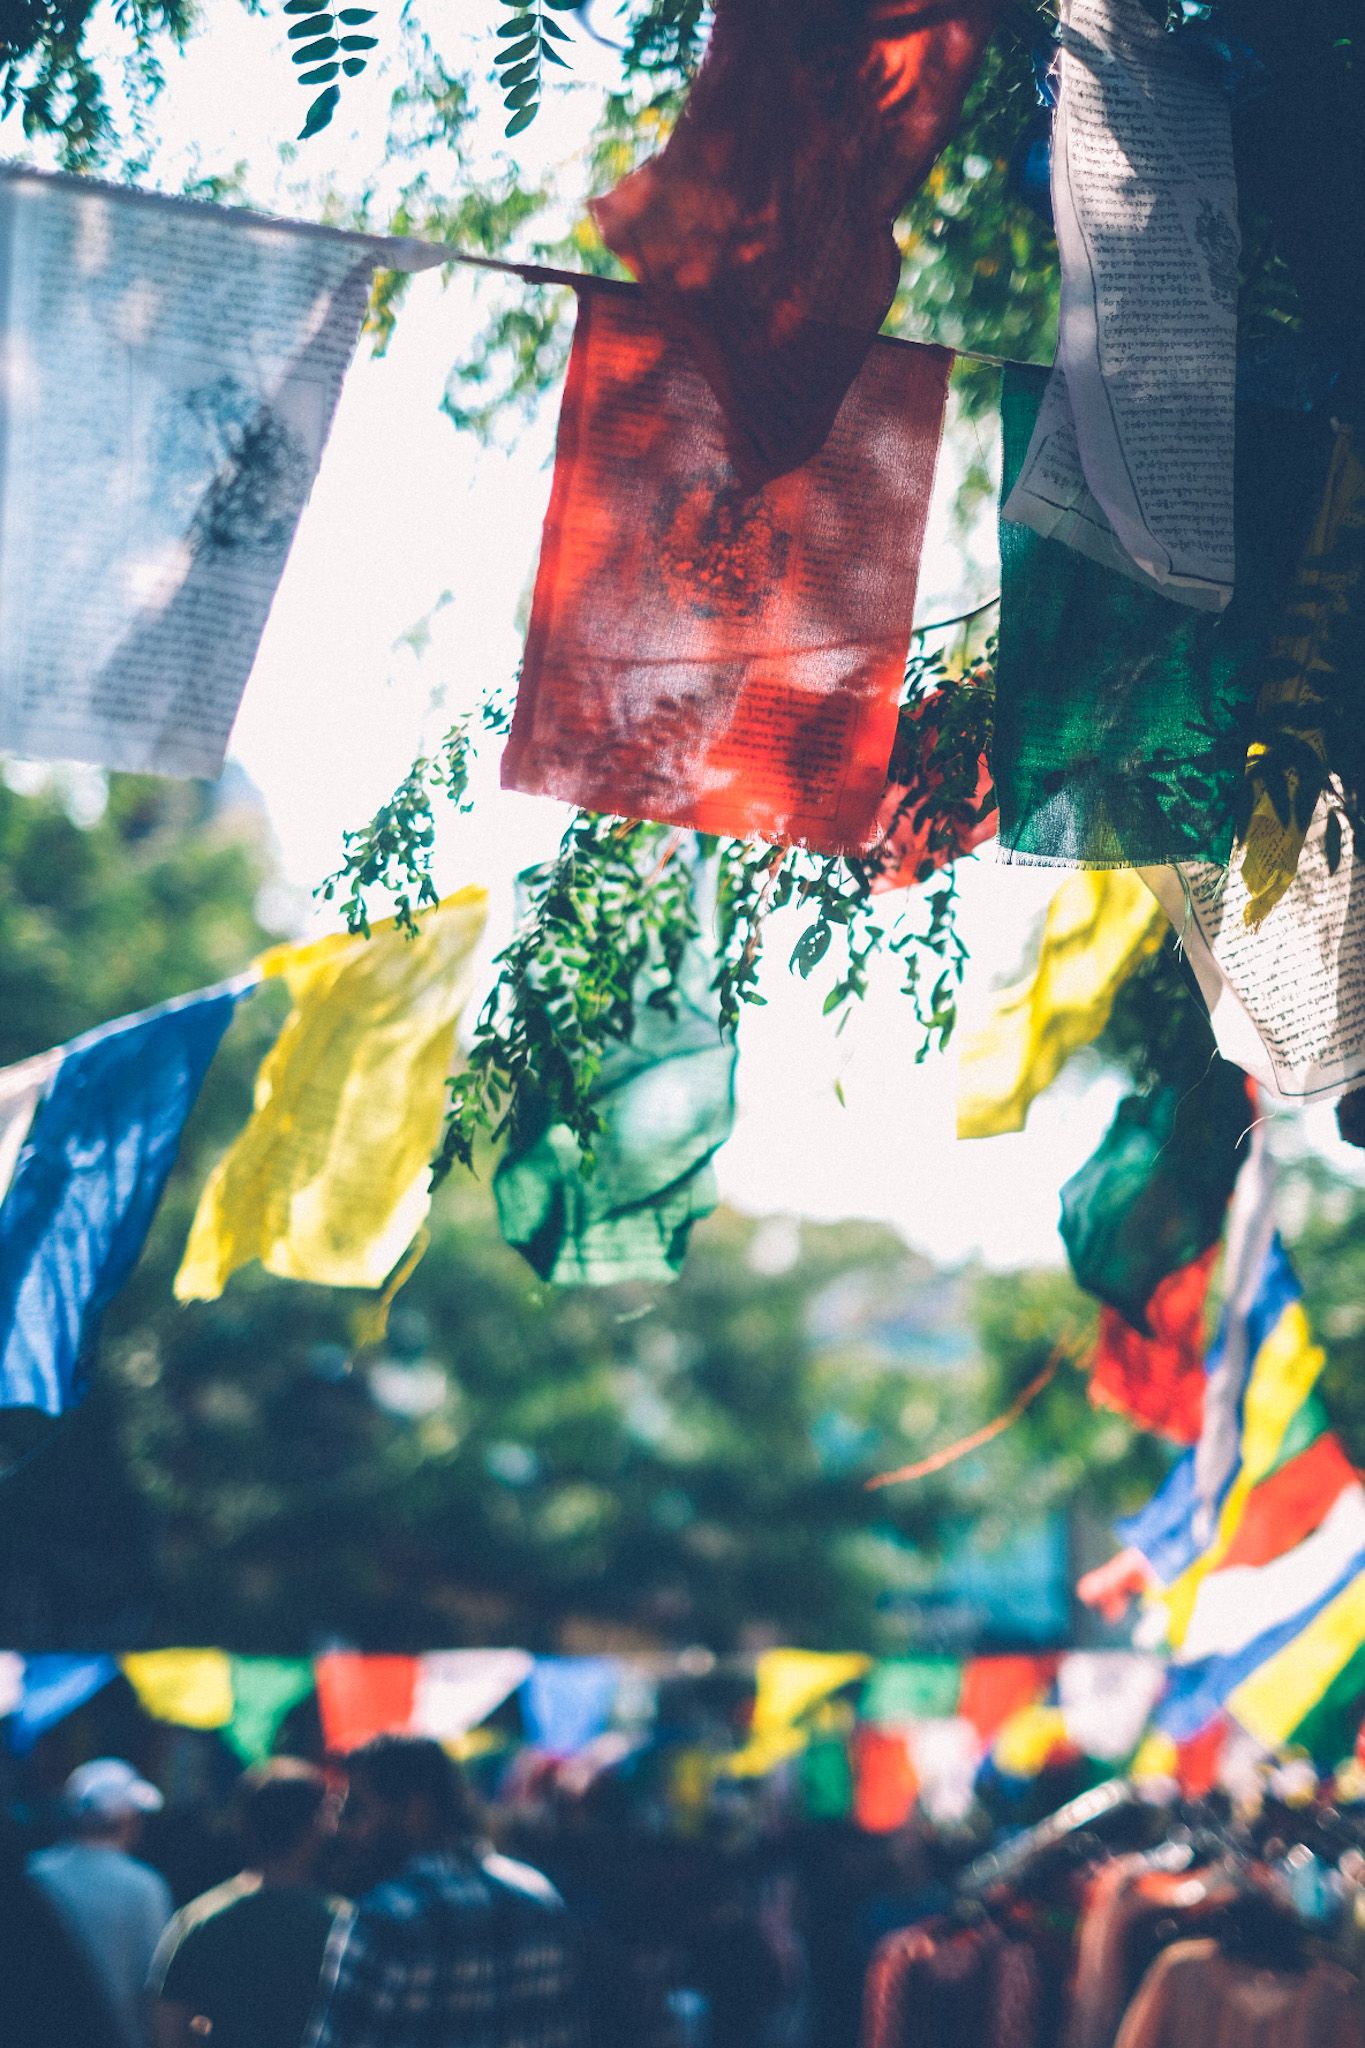 Tibetan flags are strung across the street for a momo festival.